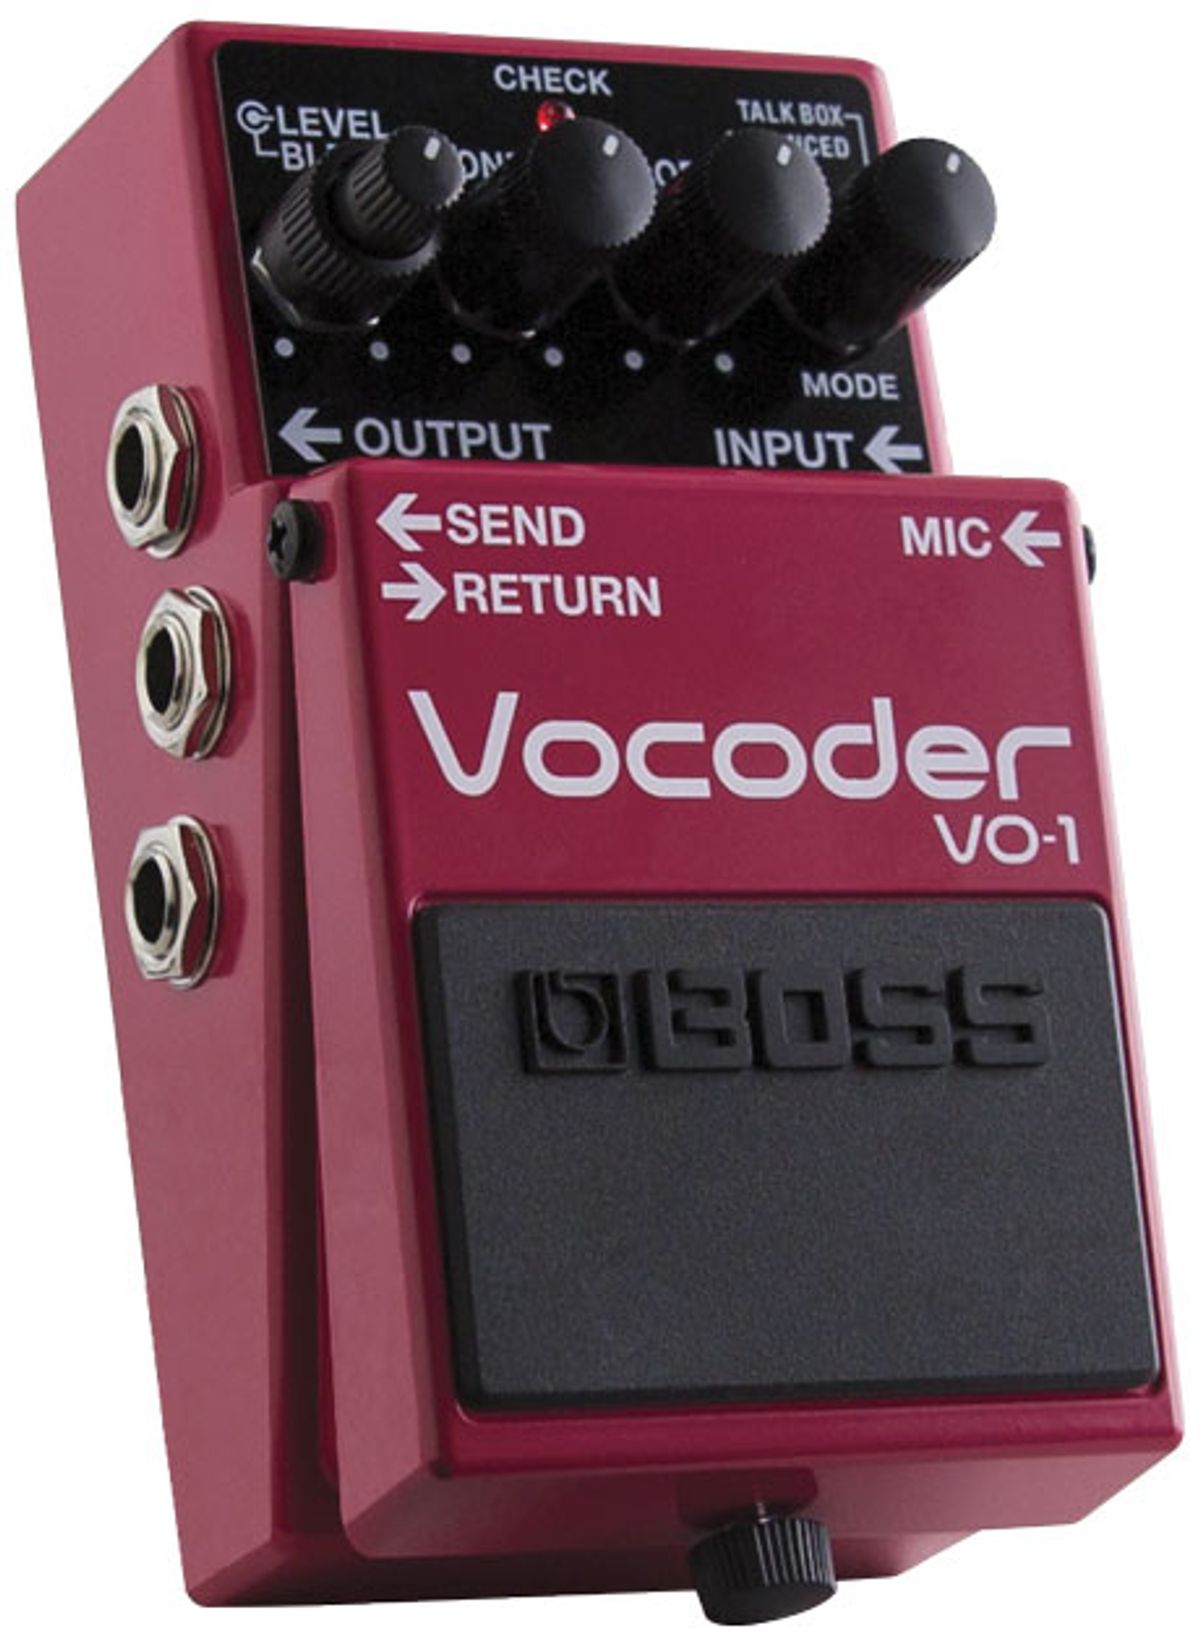 Boss VO-1 Vocoder Review